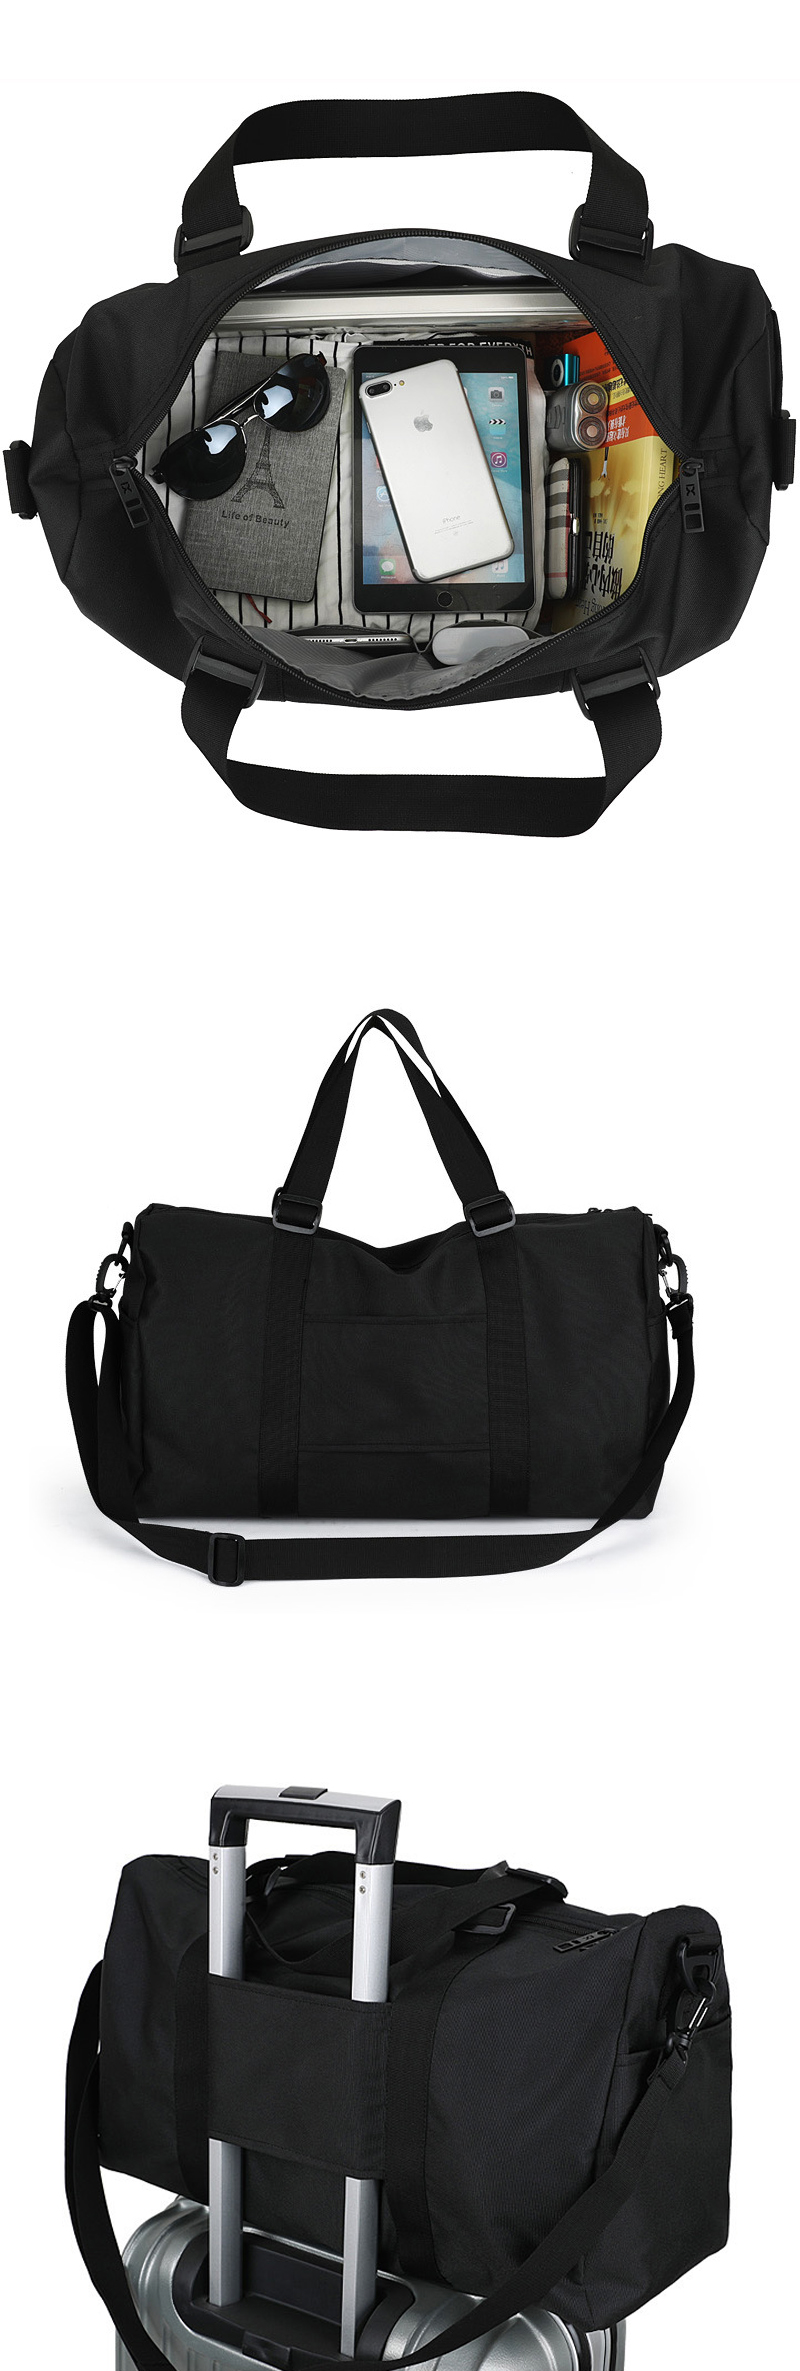 52x31x17cm-Travel-Boarding-Bag-Large-Capacity-Luggage-Handbag-Storage-Sports-Fitness-Yoga-Bag-1622741-2